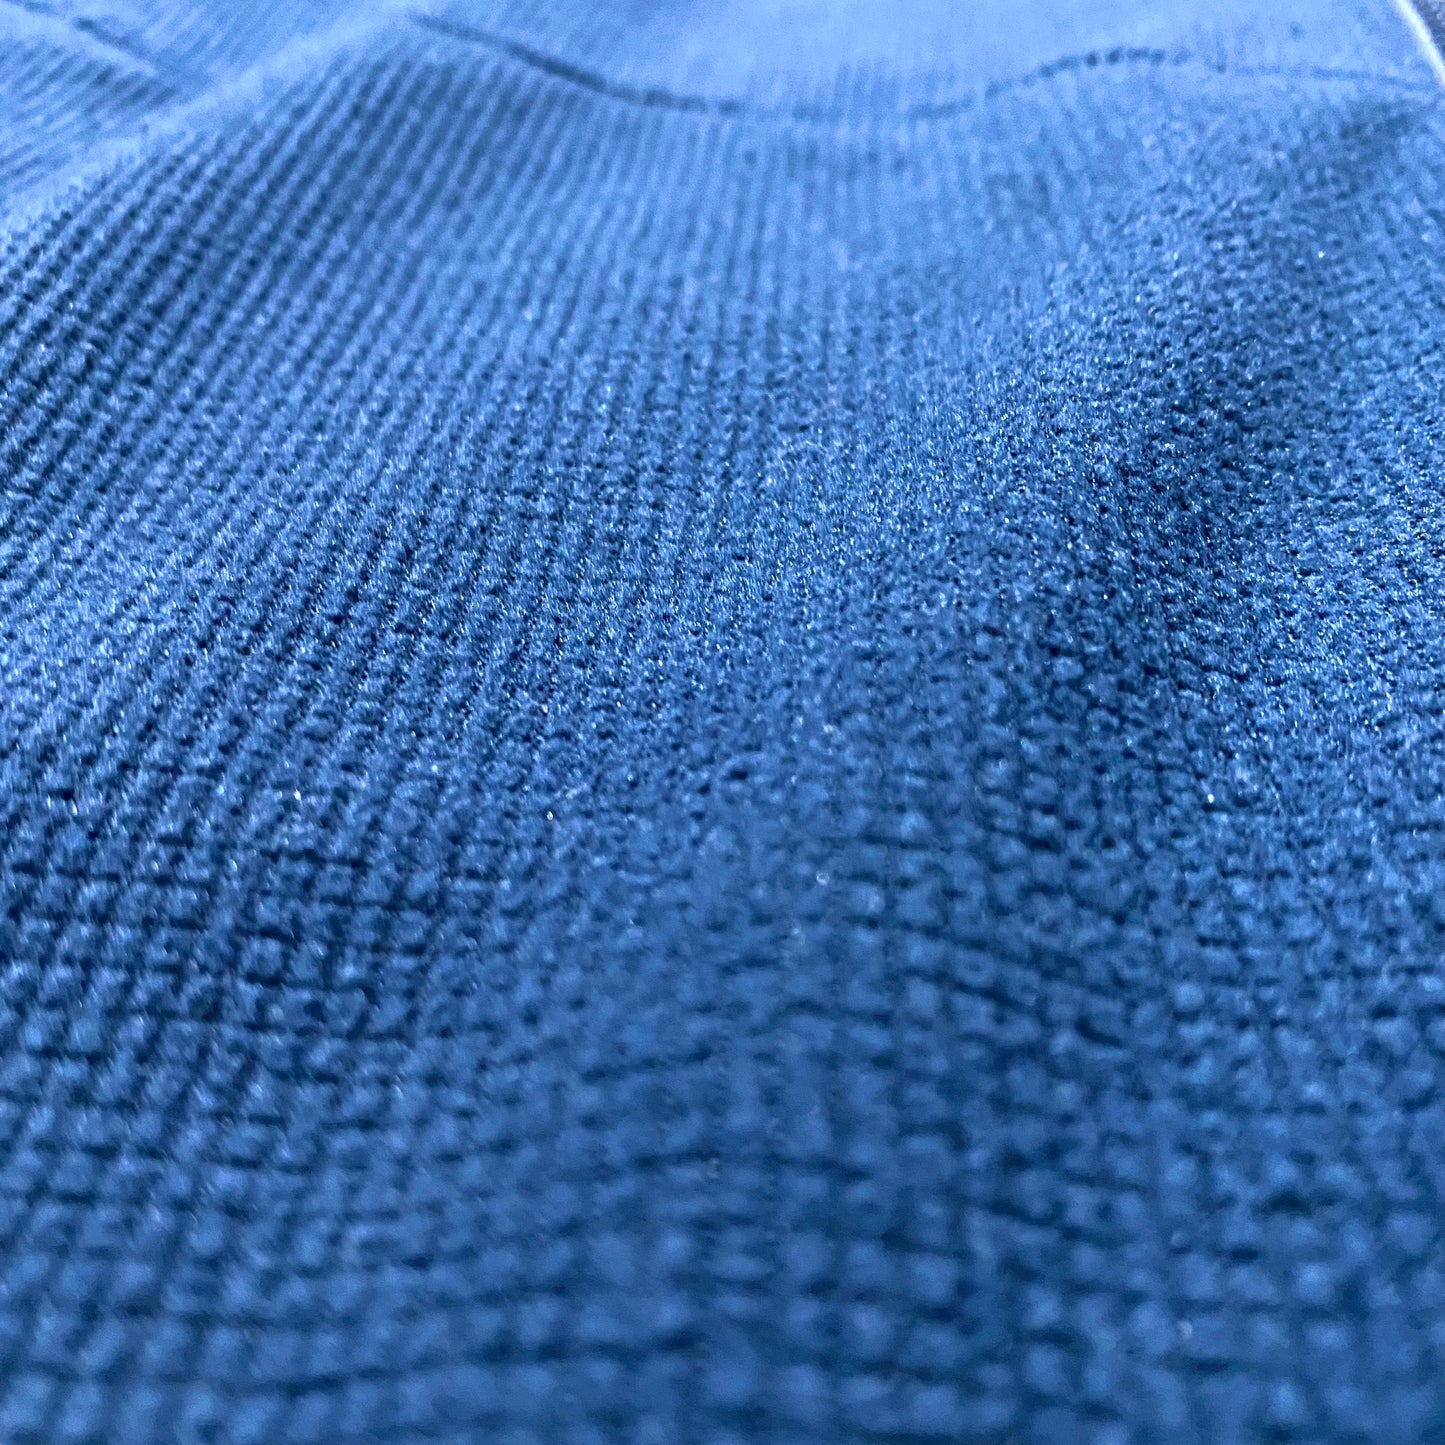 00's "ARC'TERYX" Polartech thermal knit jacket